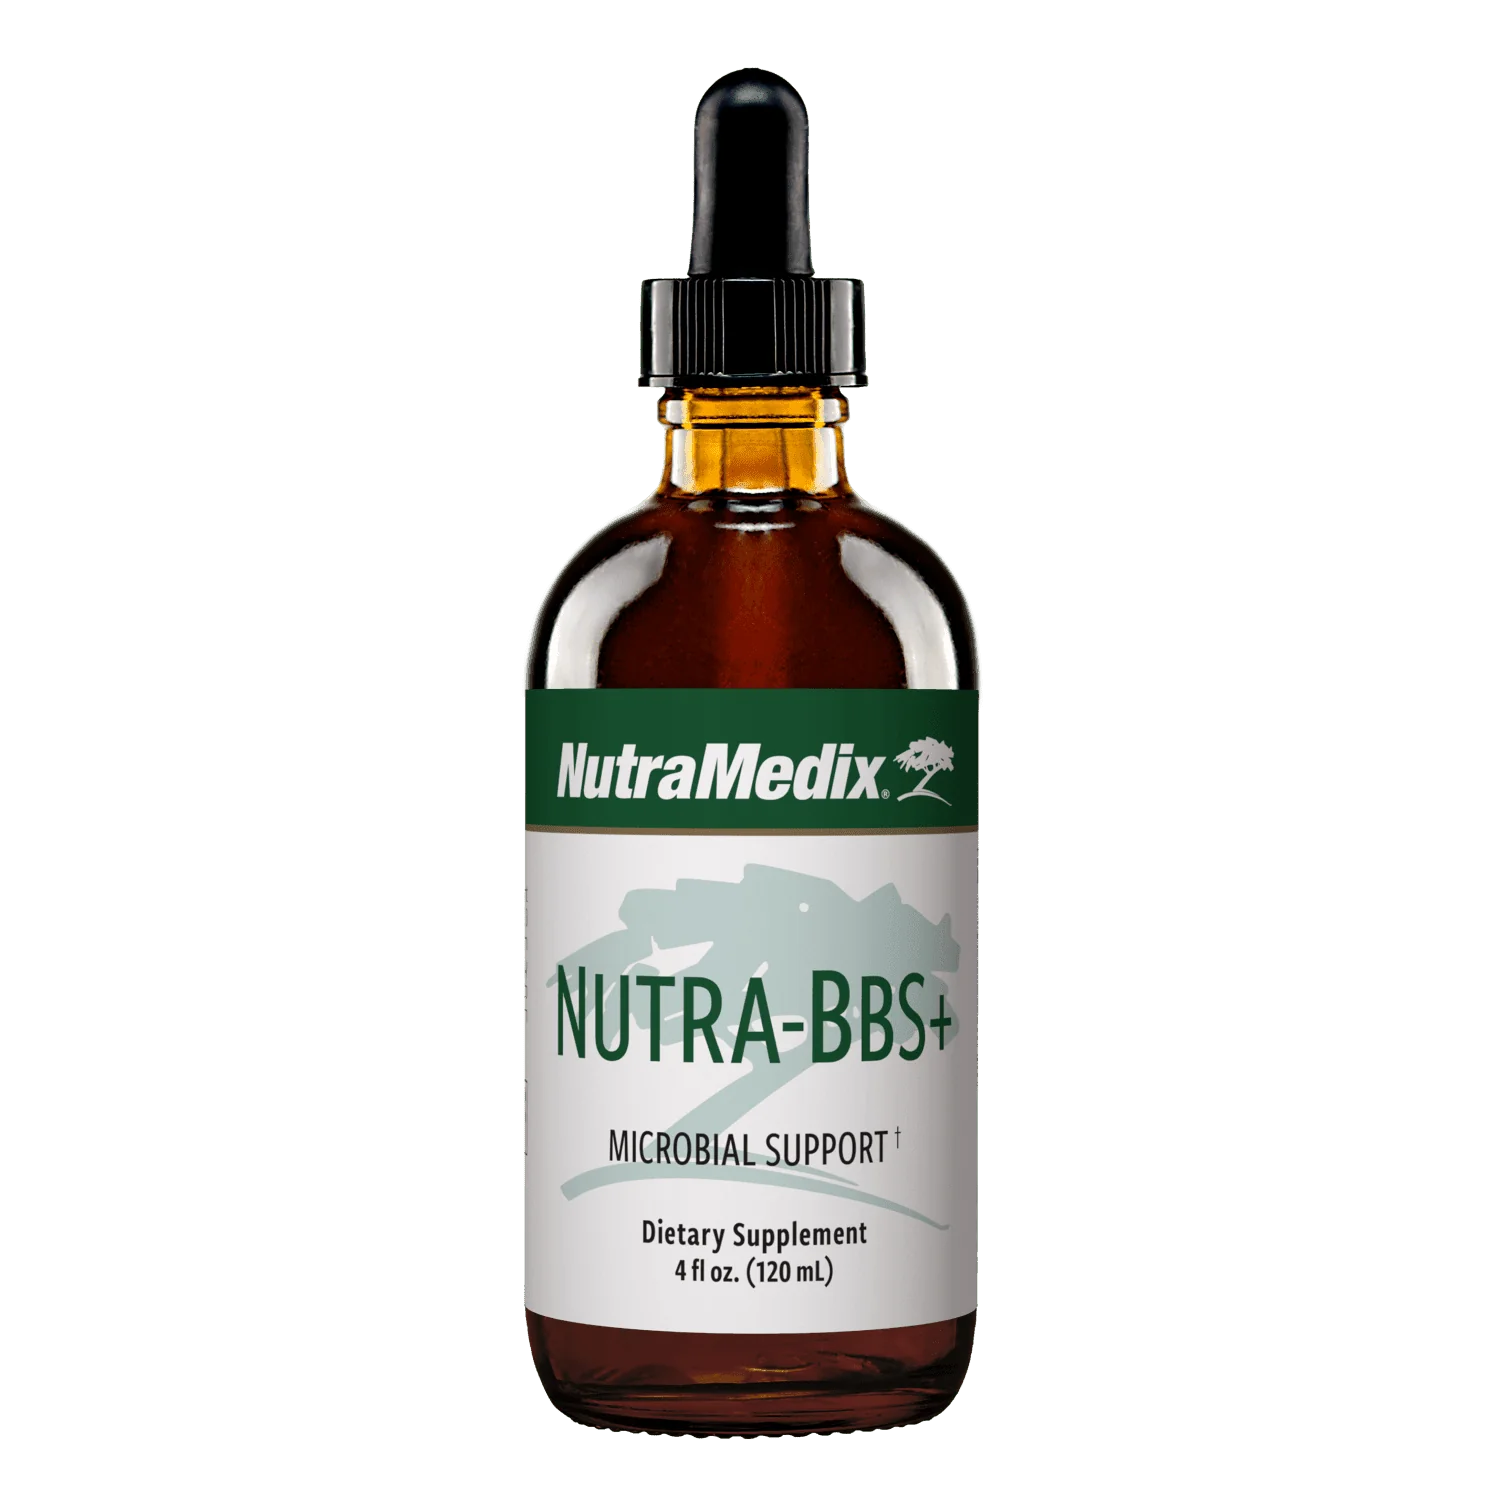 Nutra-BBS Nutramedix drops